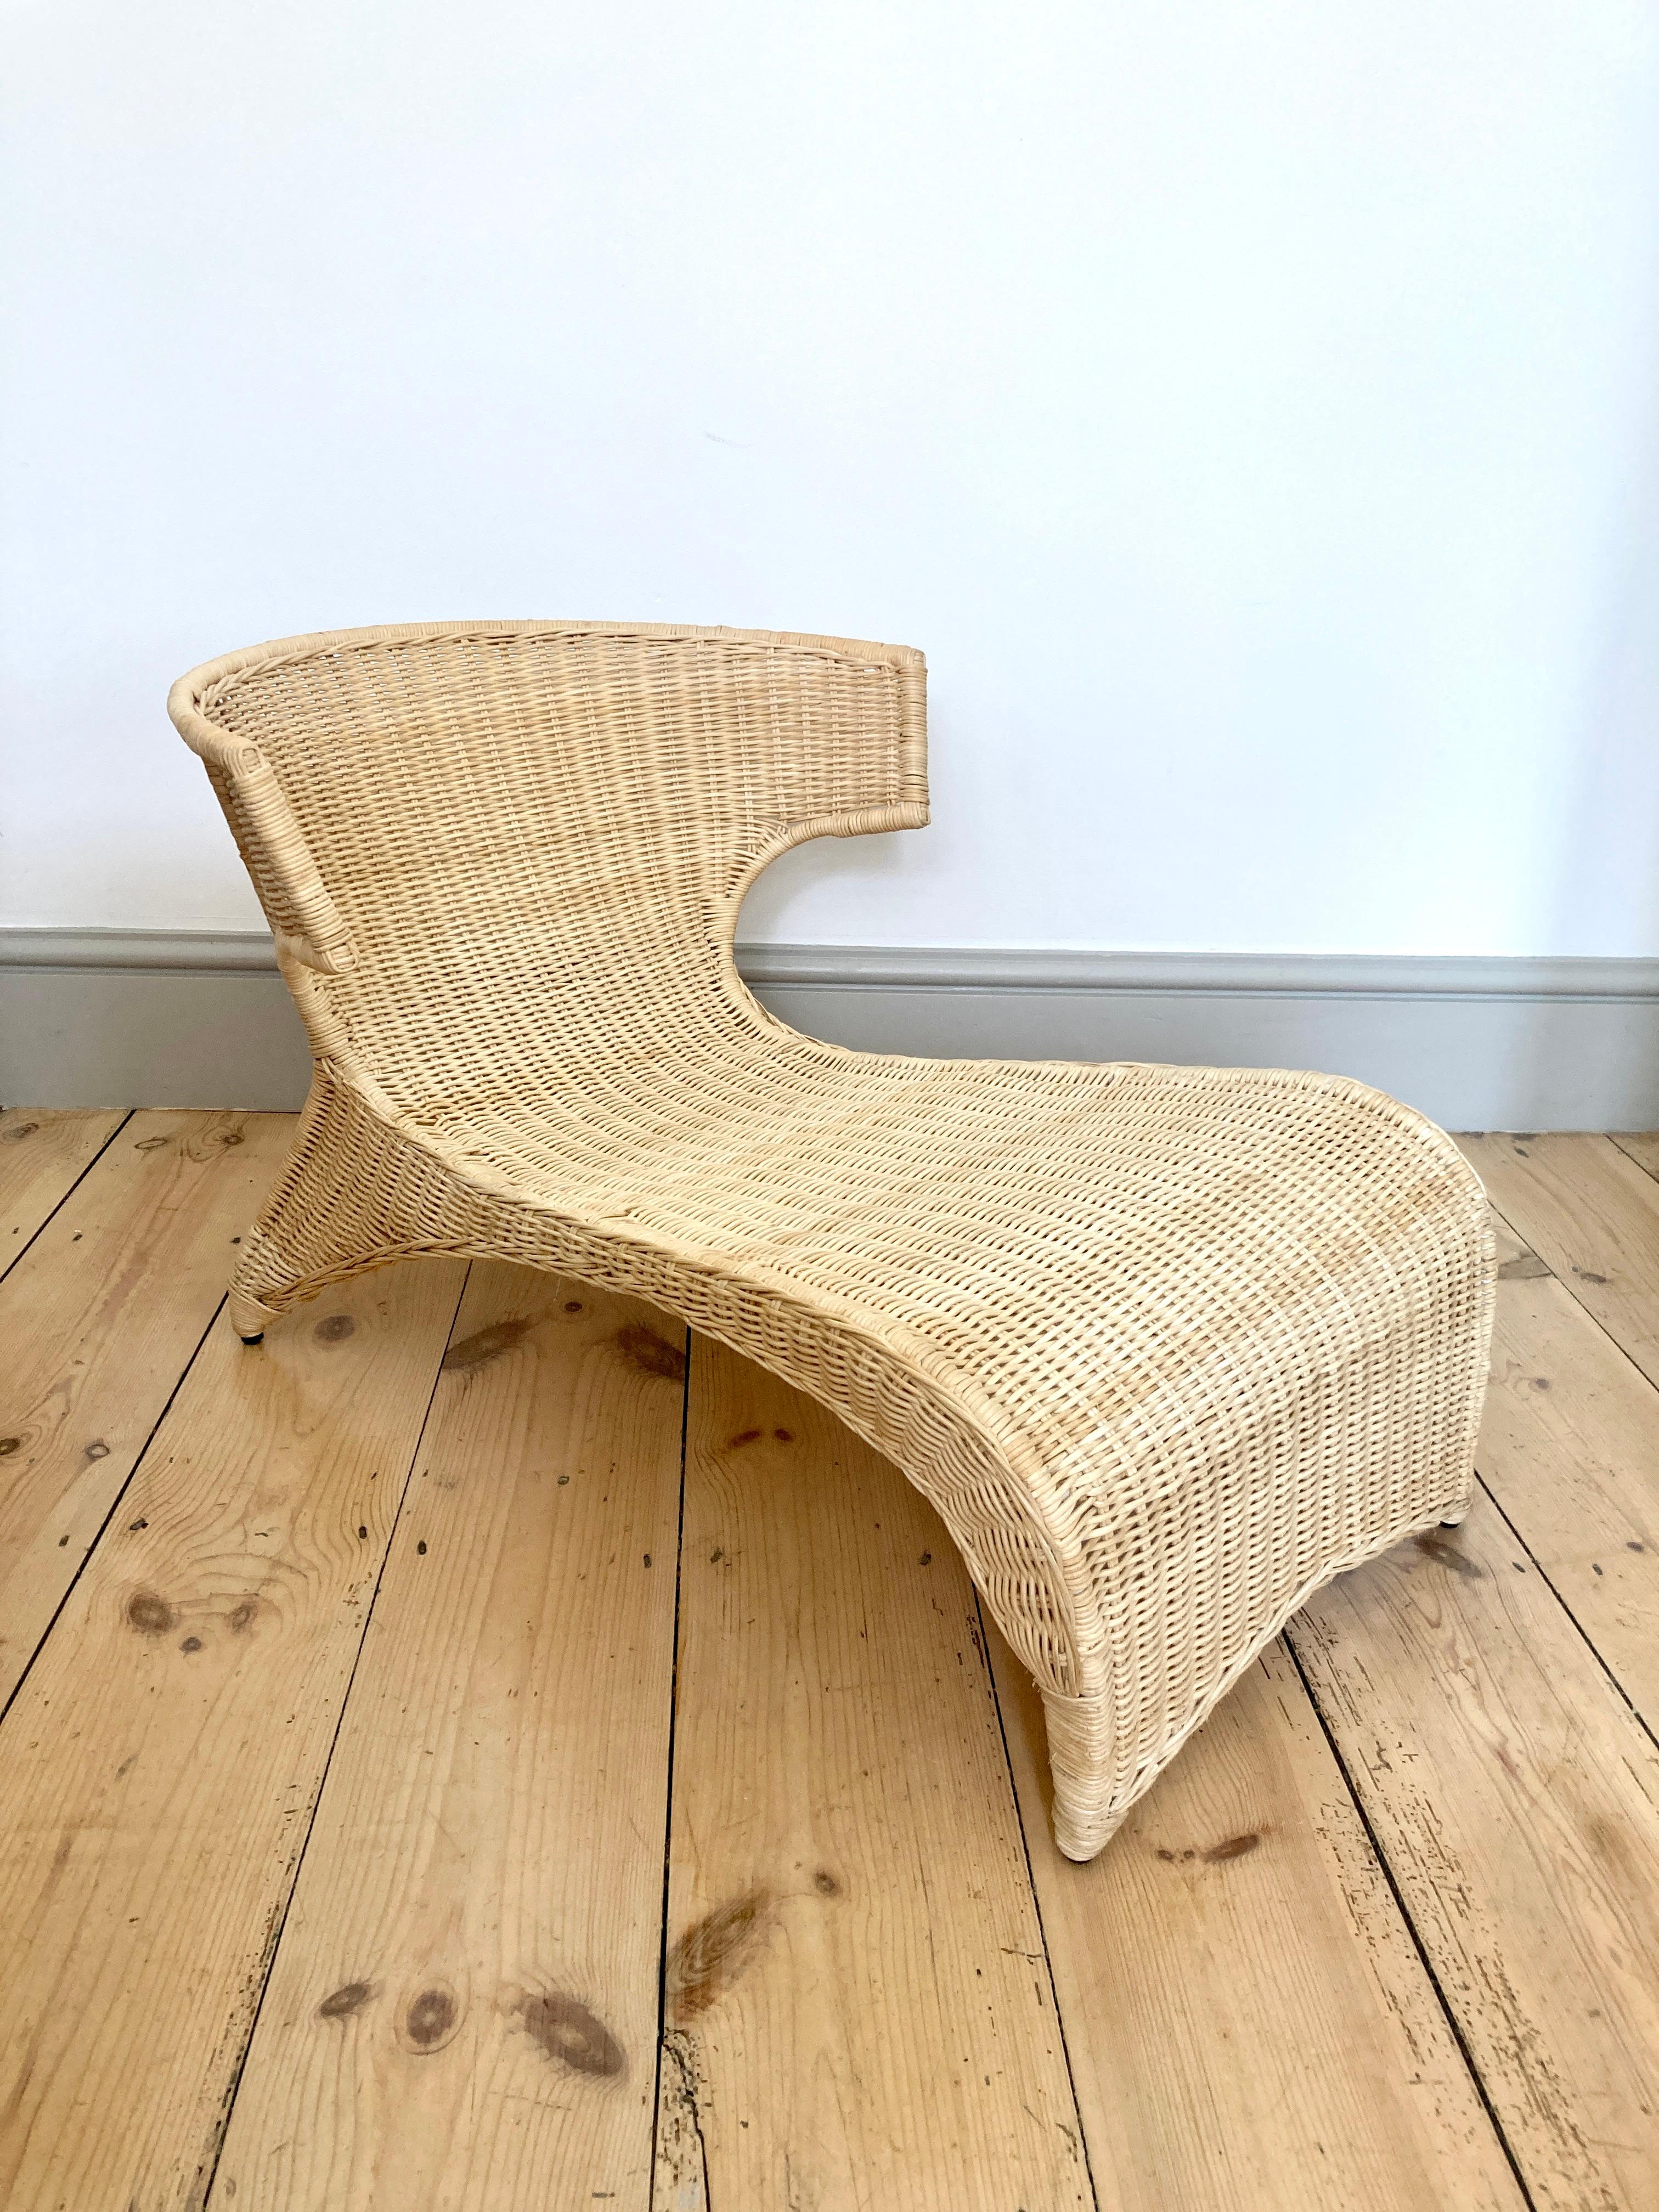 European Low Lounge Chair / Chaise Longue by Monika Mulder for Ikea Savo Natural Rattan